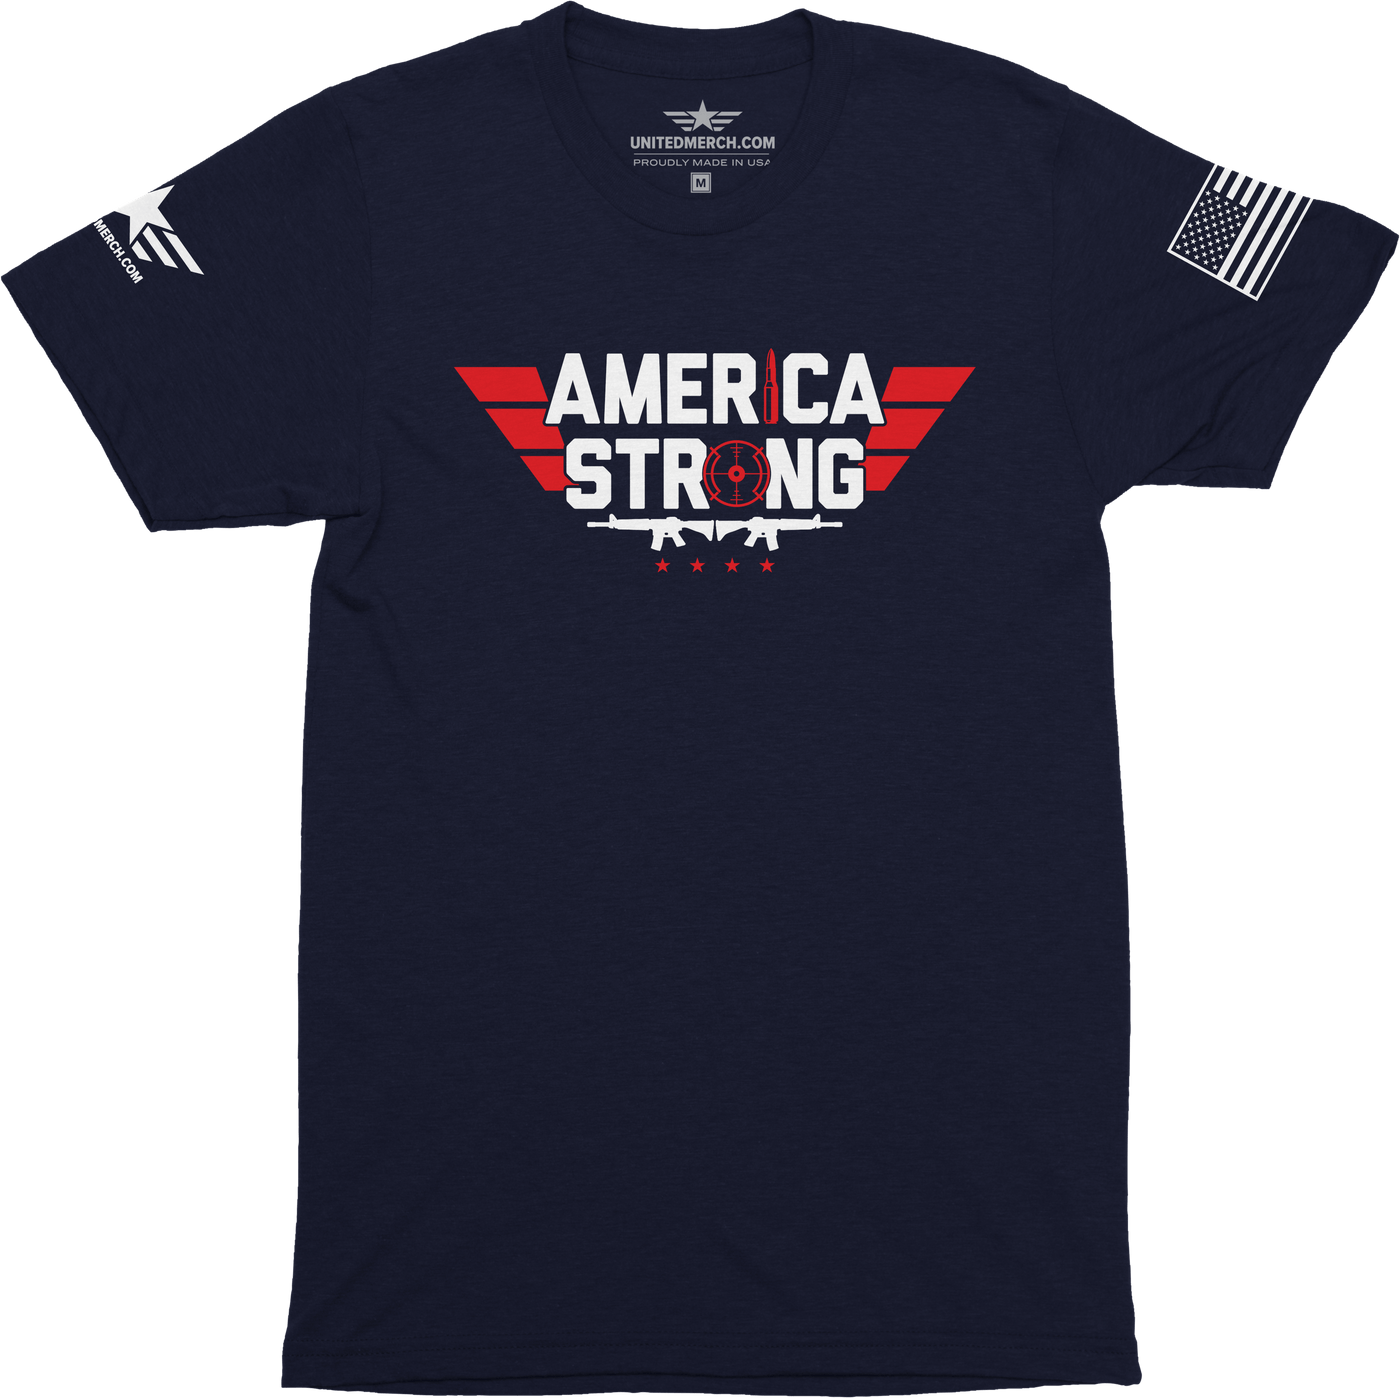 America Strong Tee